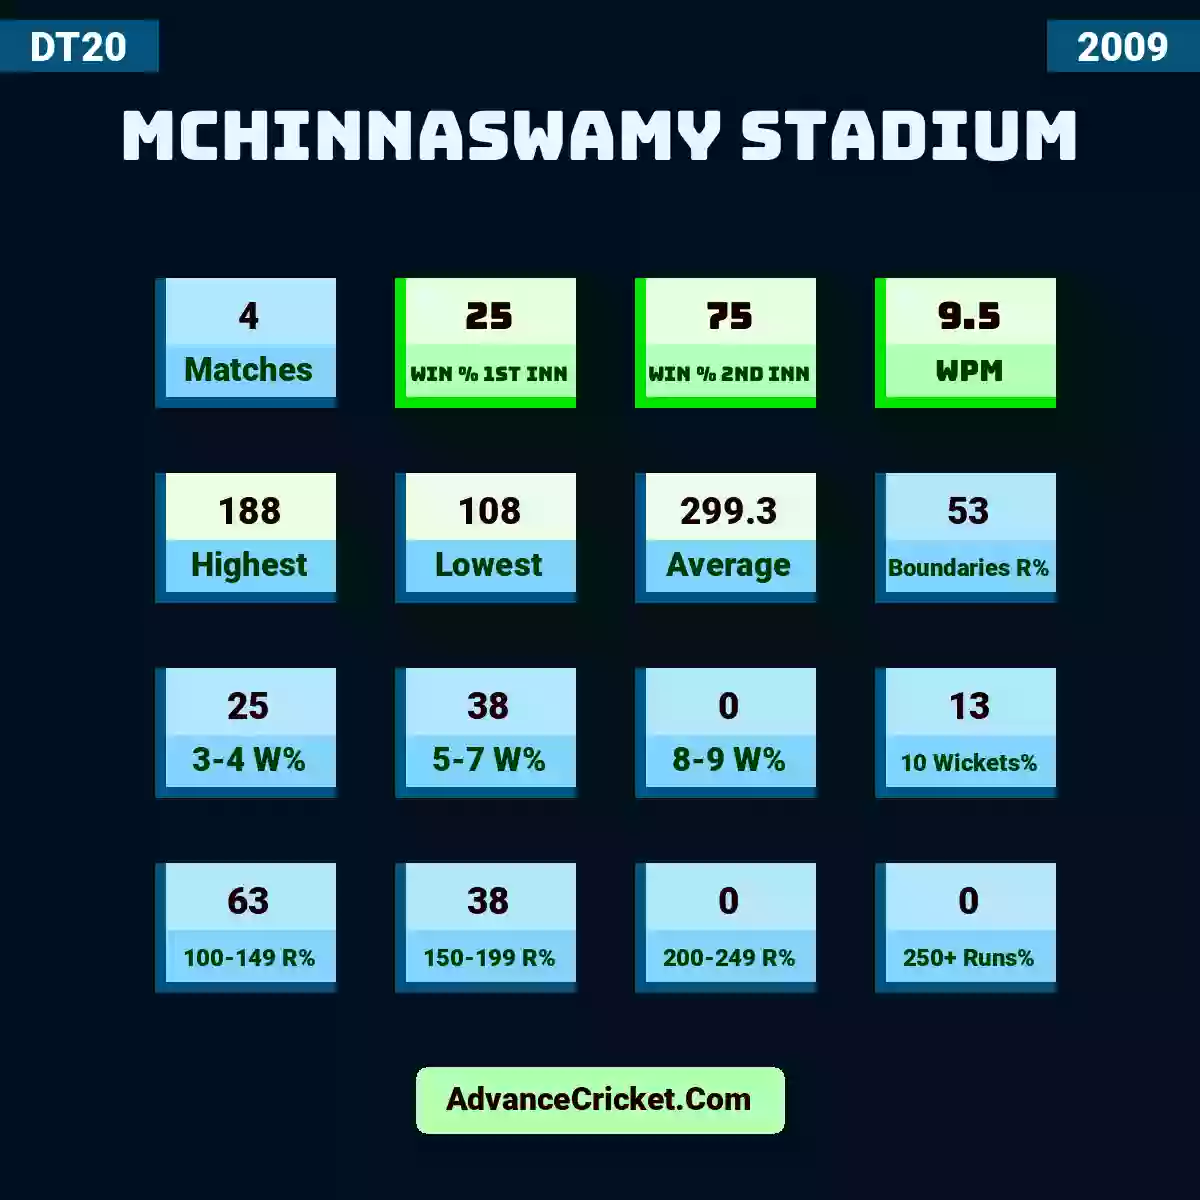 Image showing MChinnaswamy Stadium with Matches: 4, Win % 1st Inn: 25, Win % 2nd Inn: 75, WPM: 9.5, Highest: 188, Lowest: 108, Average: 299.3, Boundaries R%: 53, 3-4 W%: 25, 5-7 W%: 38, 8-9 W%: 0, 10 Wickets%: 13, 100-149 R%: 63, 150-199 R%: 38, 200-249 R%: 0, 250+ Runs%: 0.